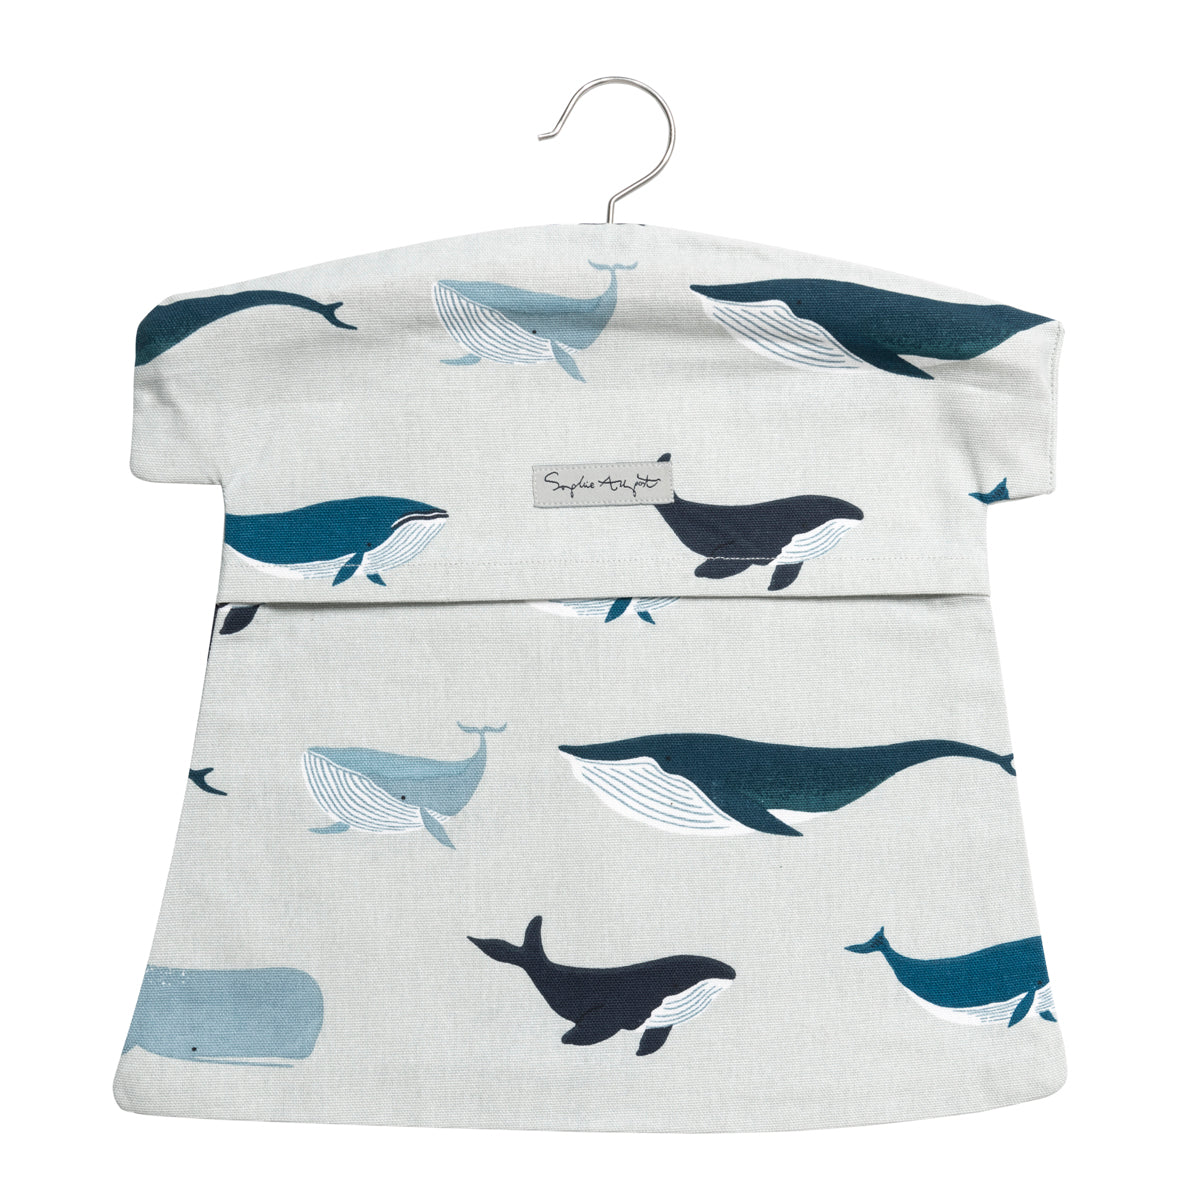 Whales Summer Cotton Peg Bag by Sophie Allport